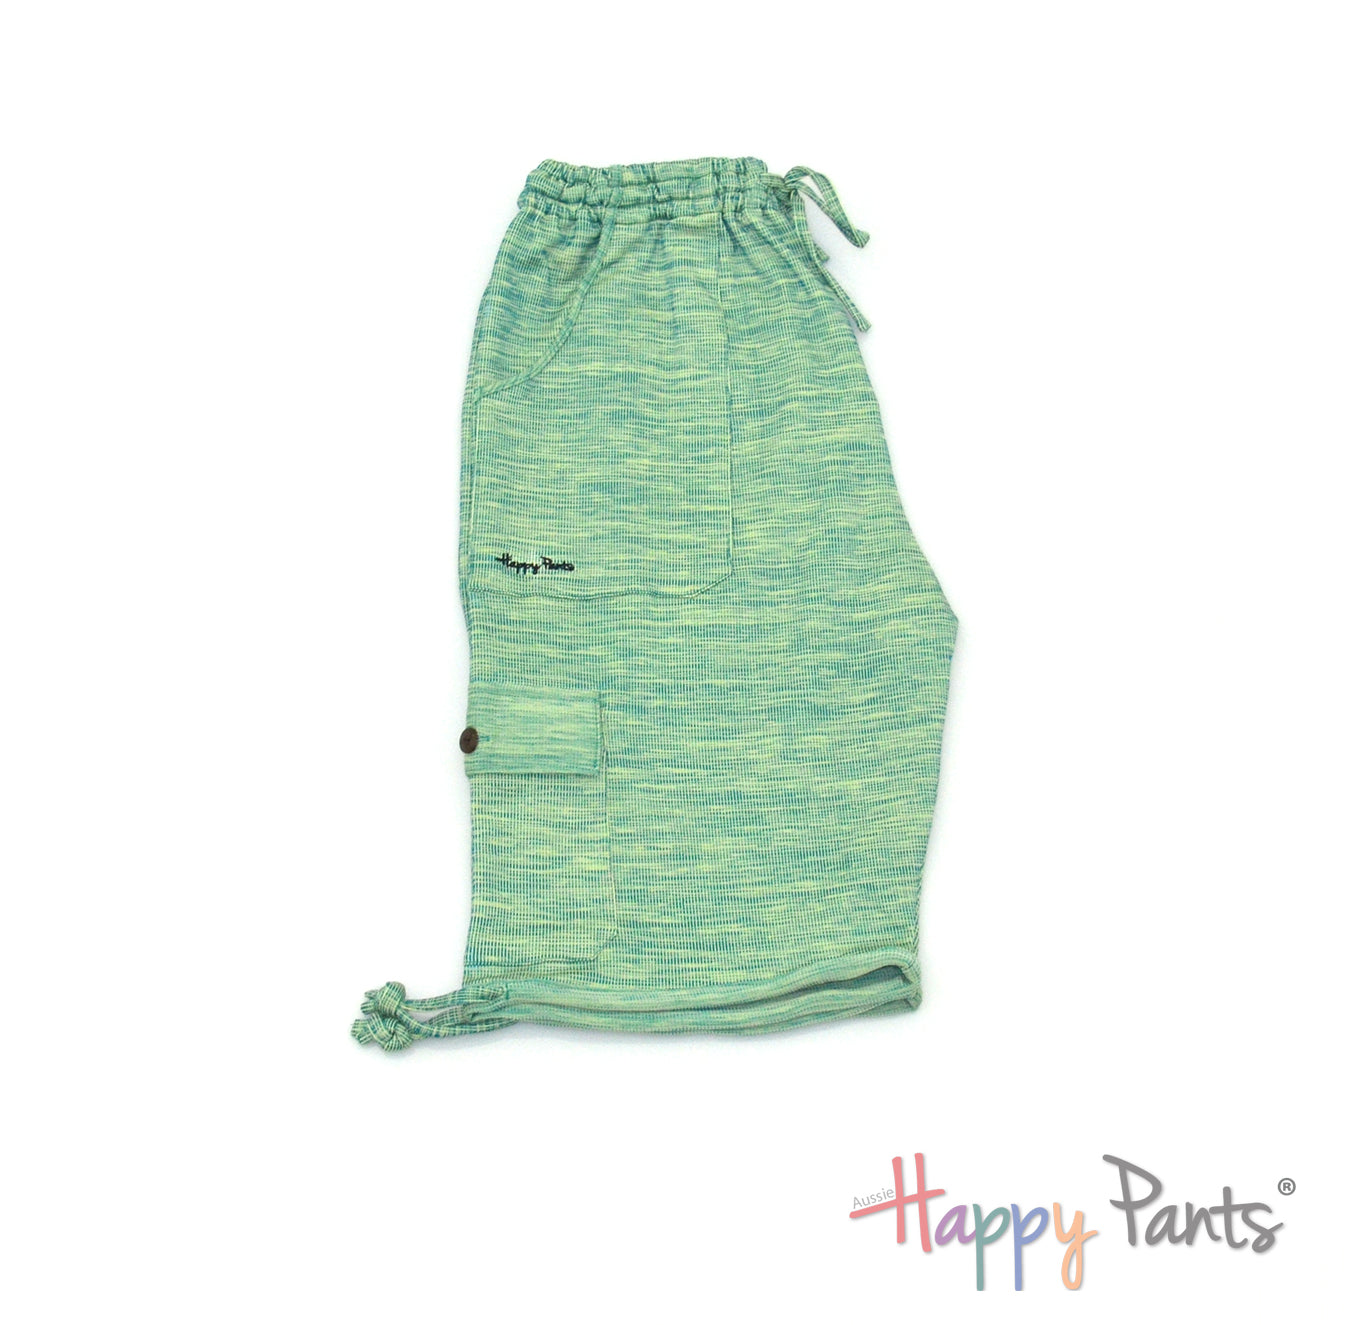 Green Ladies shorts with elastic waist holiday pants resort wear Australia comfy bermudas